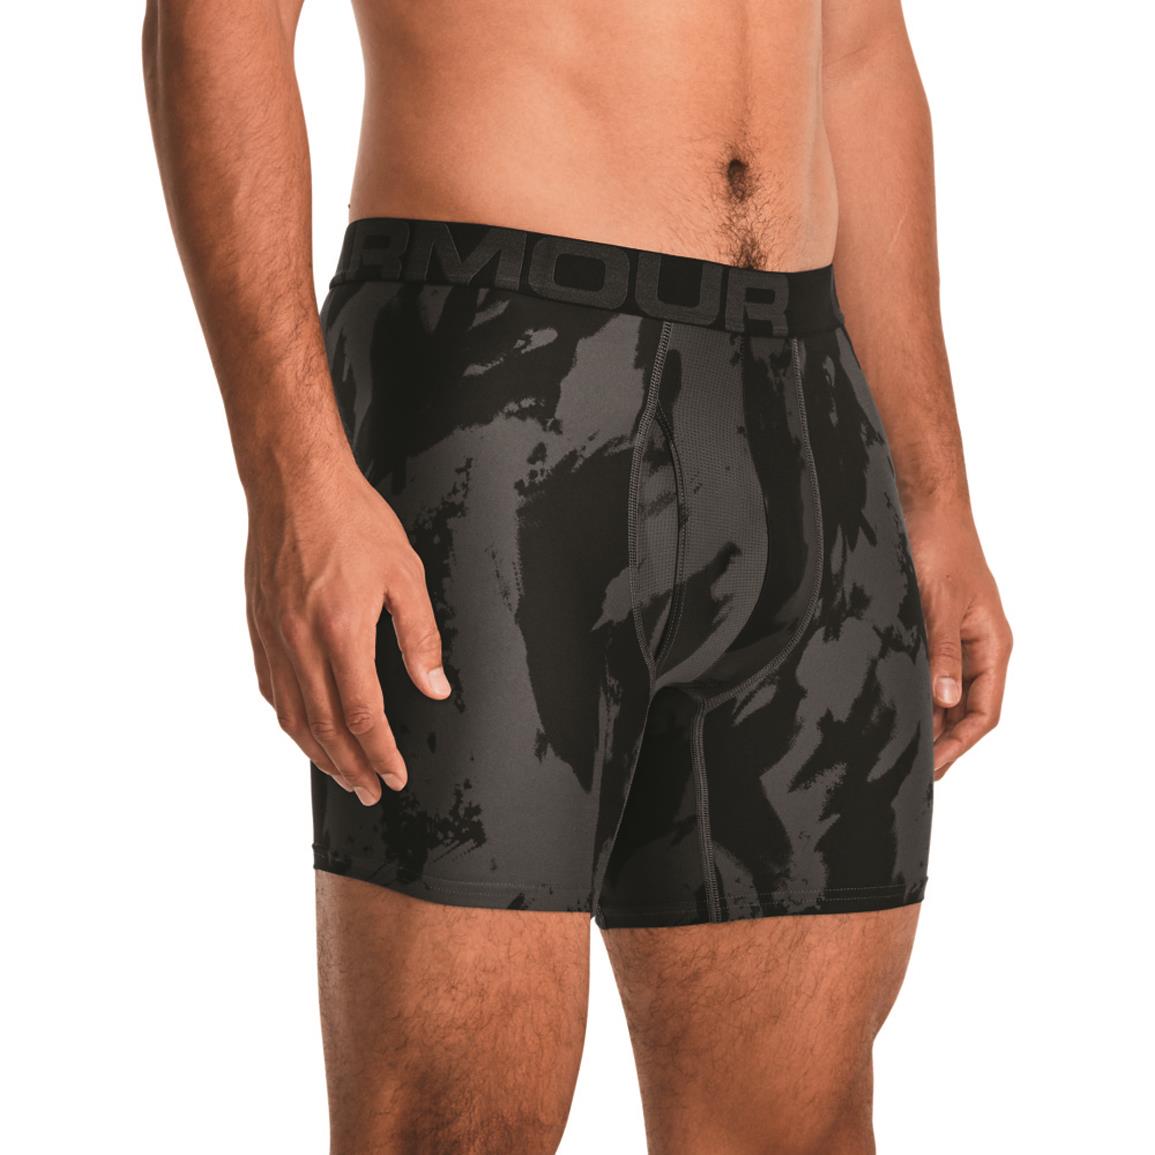 Under Armour Men's Original Series Printed Boxerjock Underwear